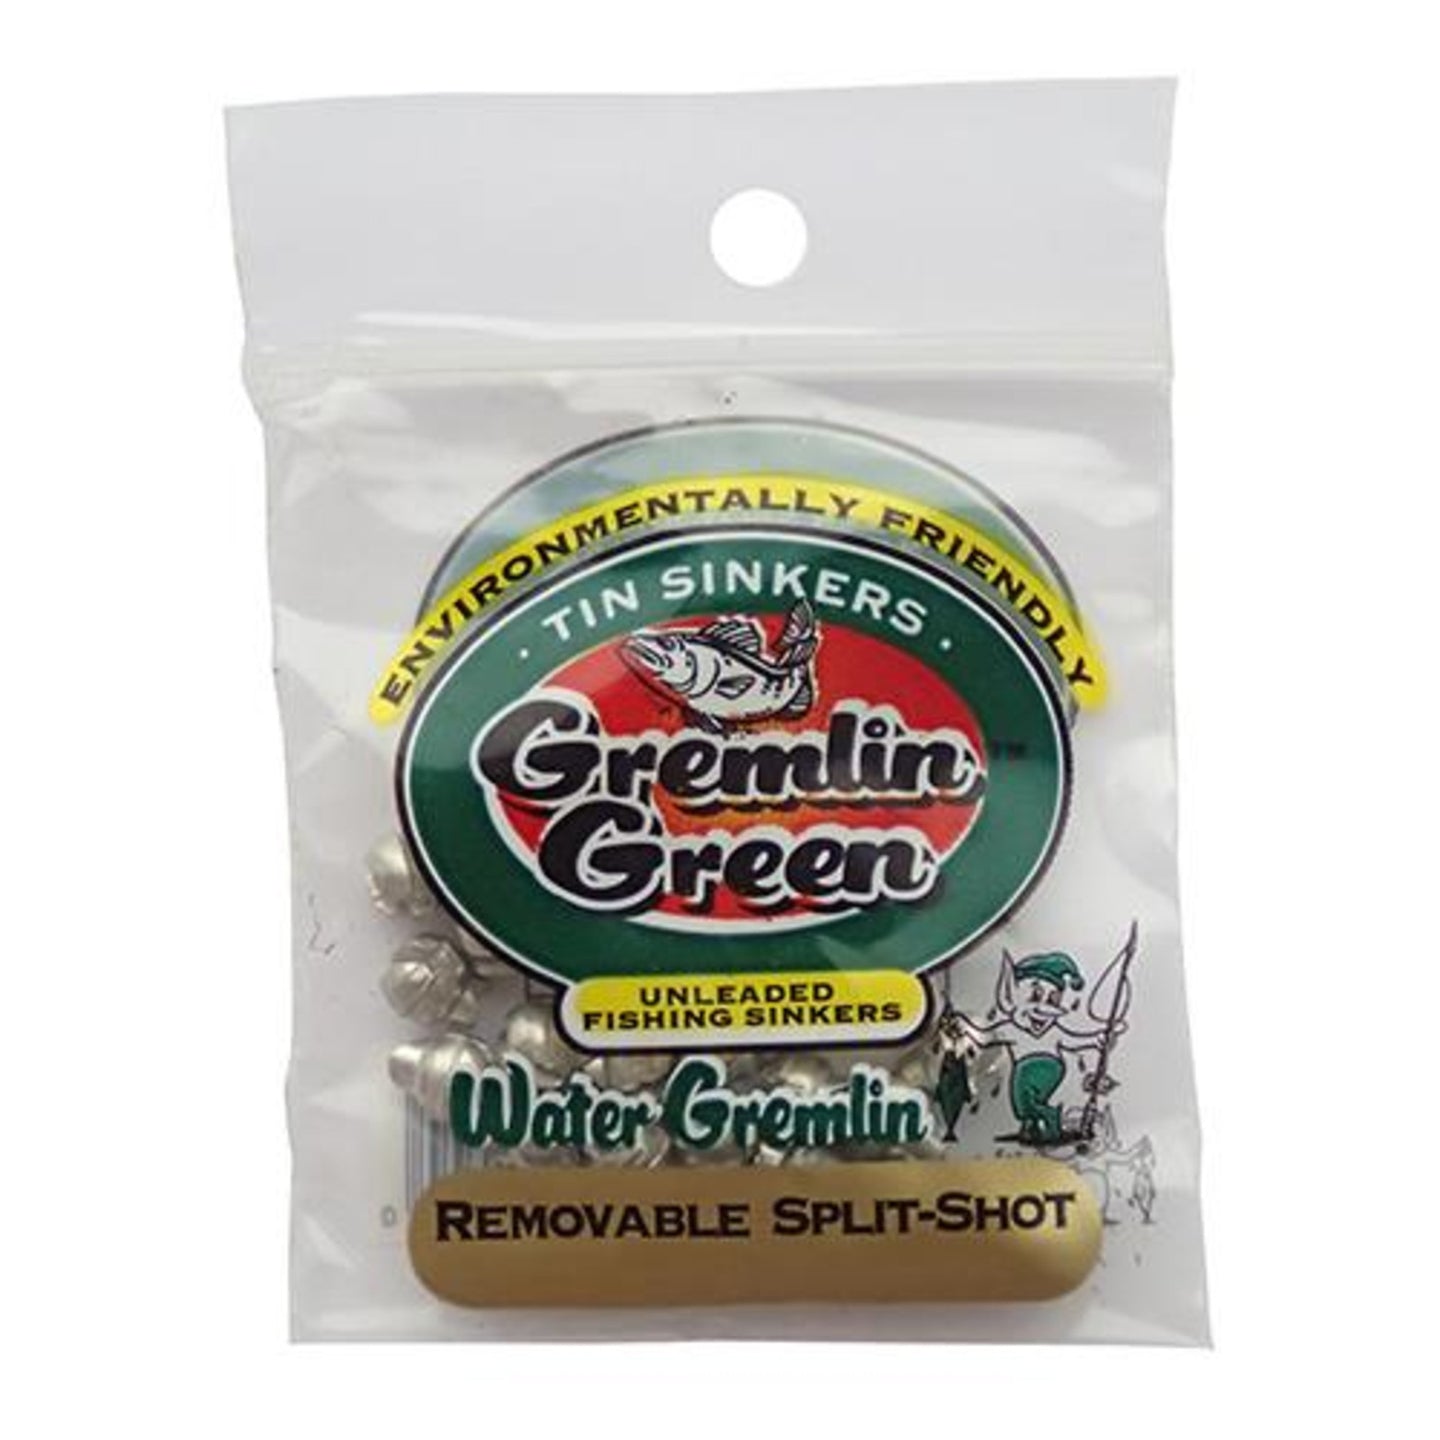 Water Gremlin Green Removable Tin Split Shot